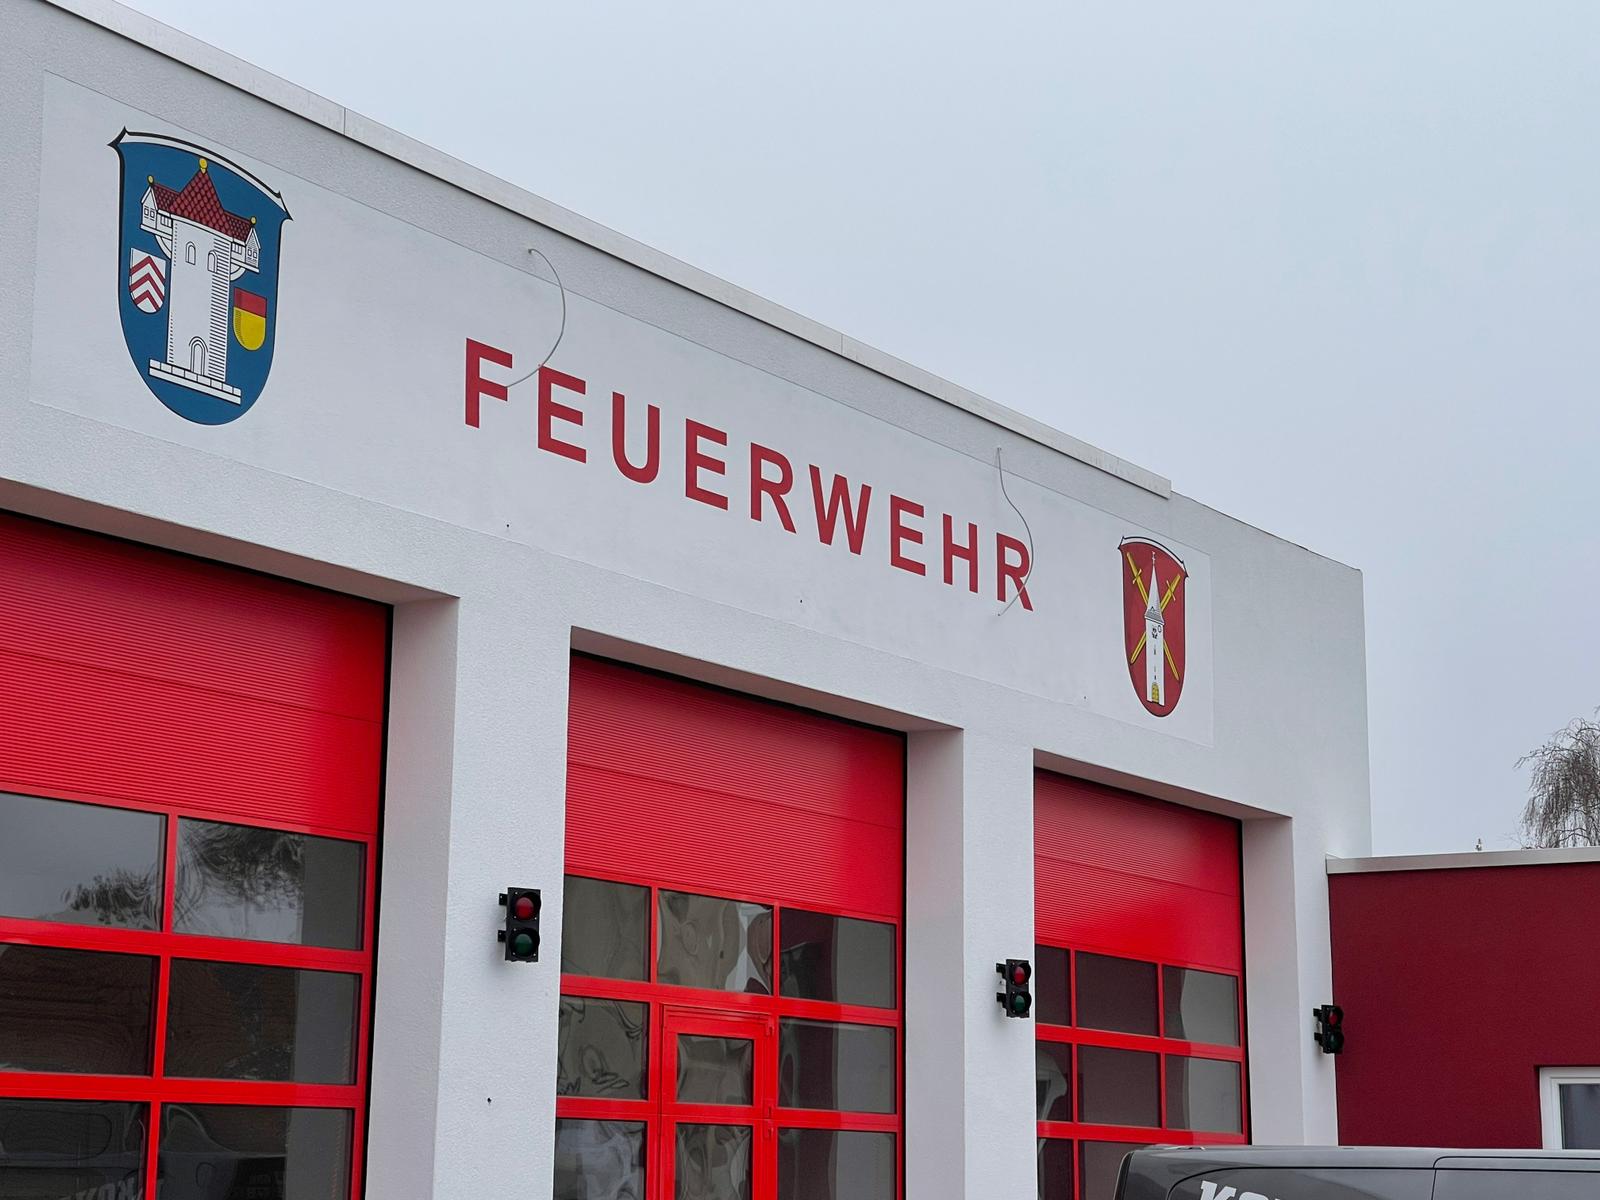 (c) Feuerwehr-kirchgoens.de